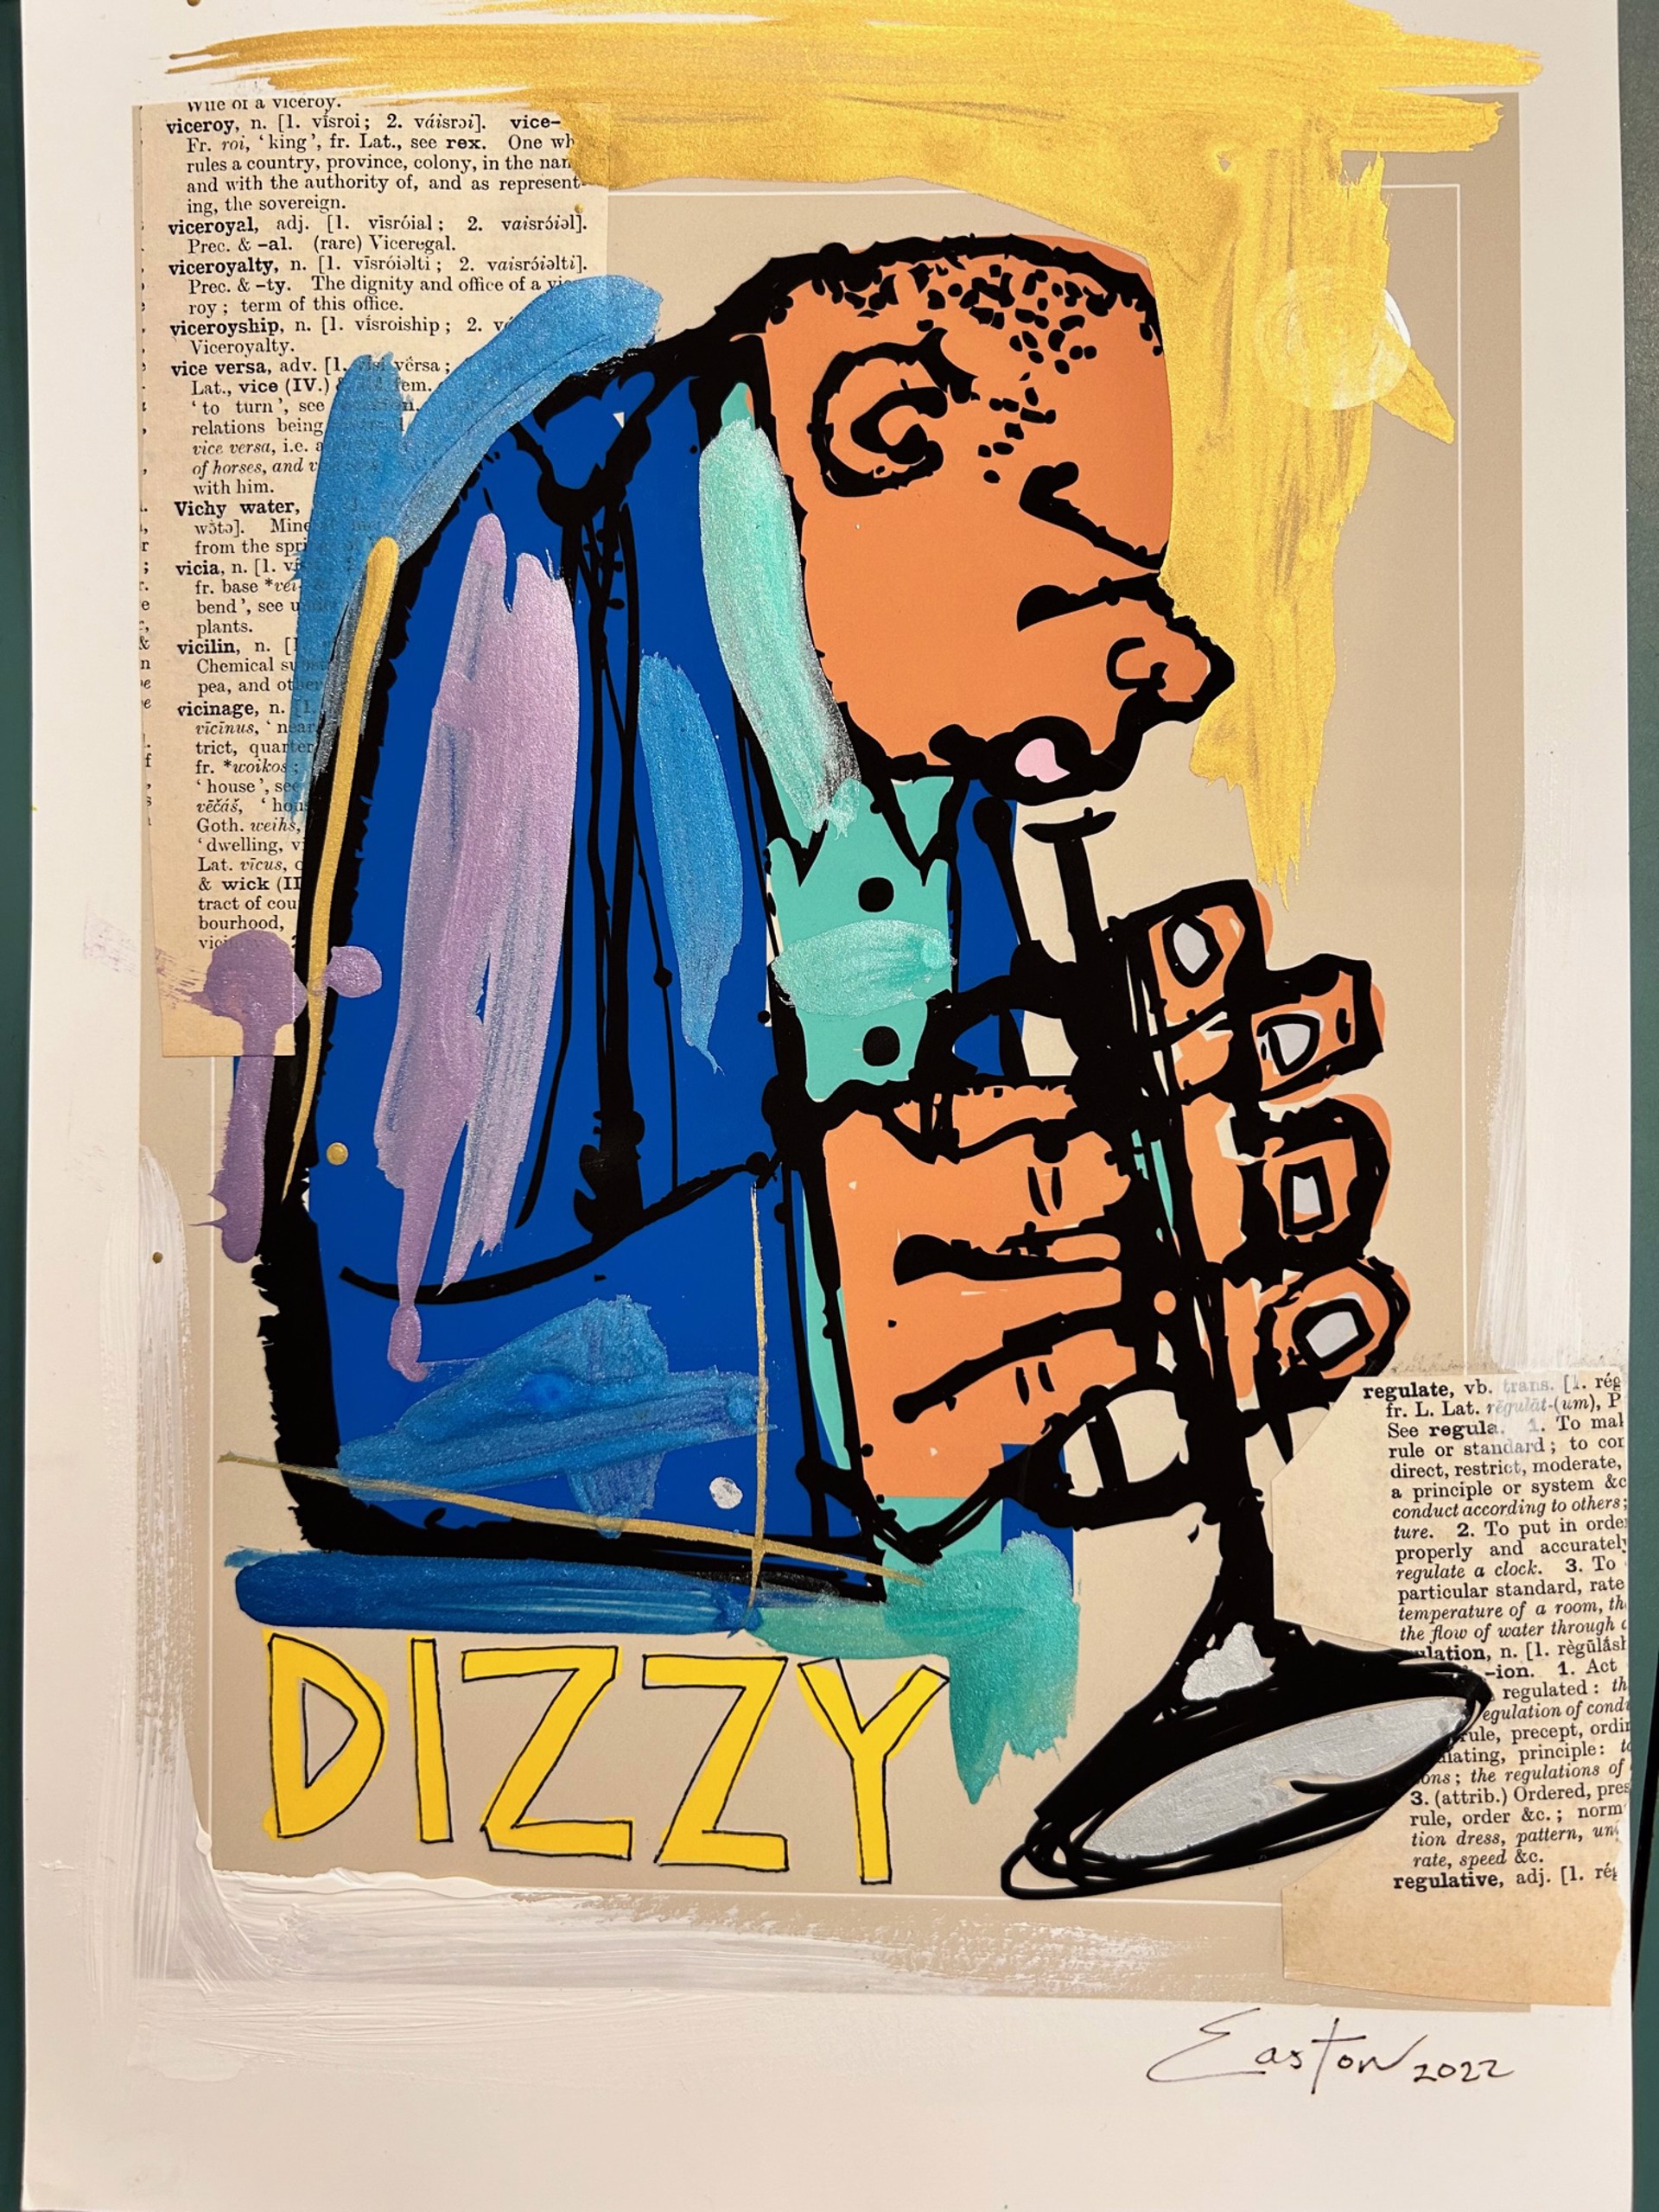 'Dizzy Gillespie" by Easton Davy